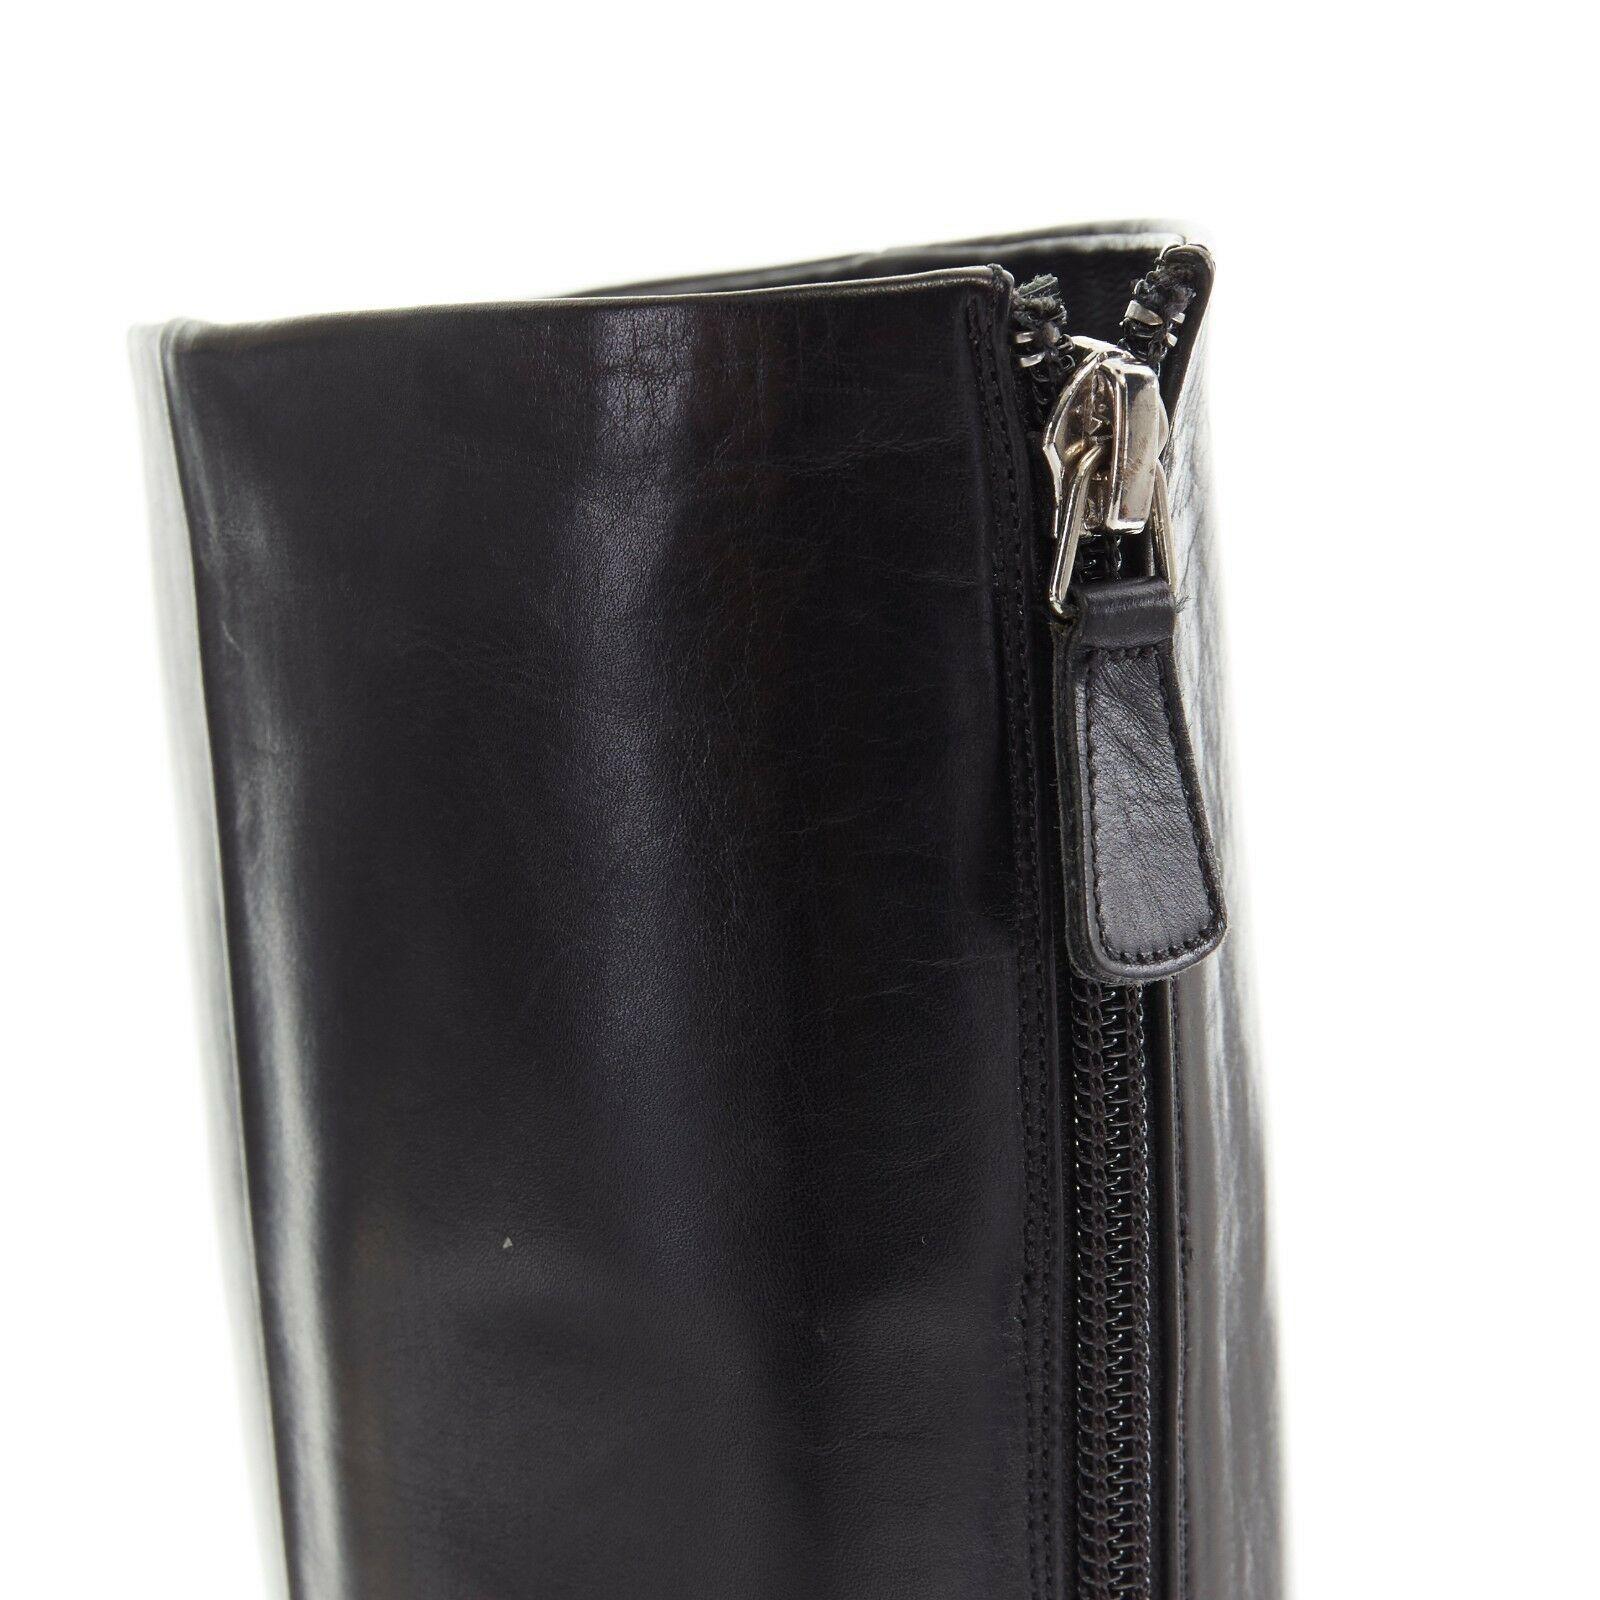 CHANEL black leather CC logo patent toe cap zip back flat high boot EU36 US6 UK3 1